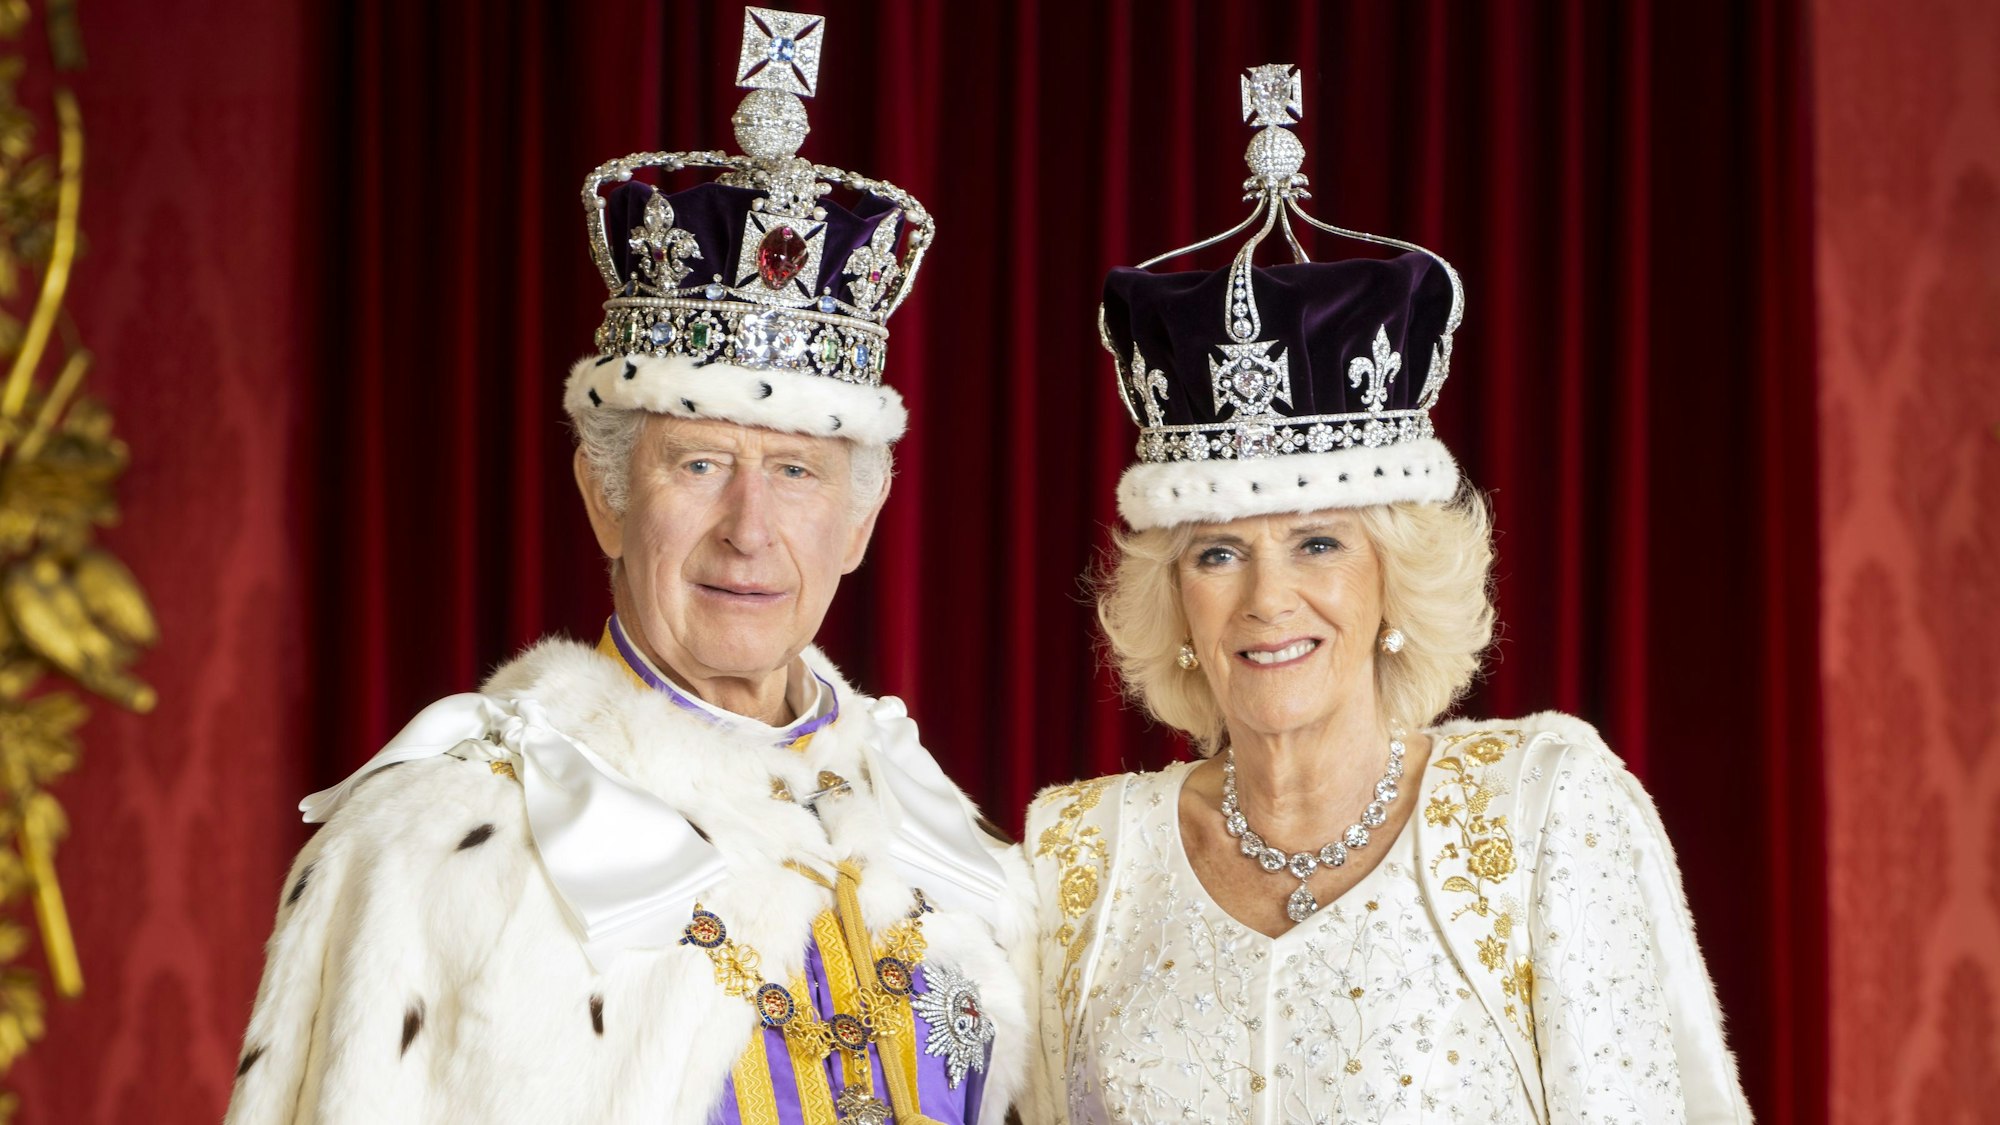 König Charles III.  und Königin Camilla im Thronsaal des Buckingham Palace